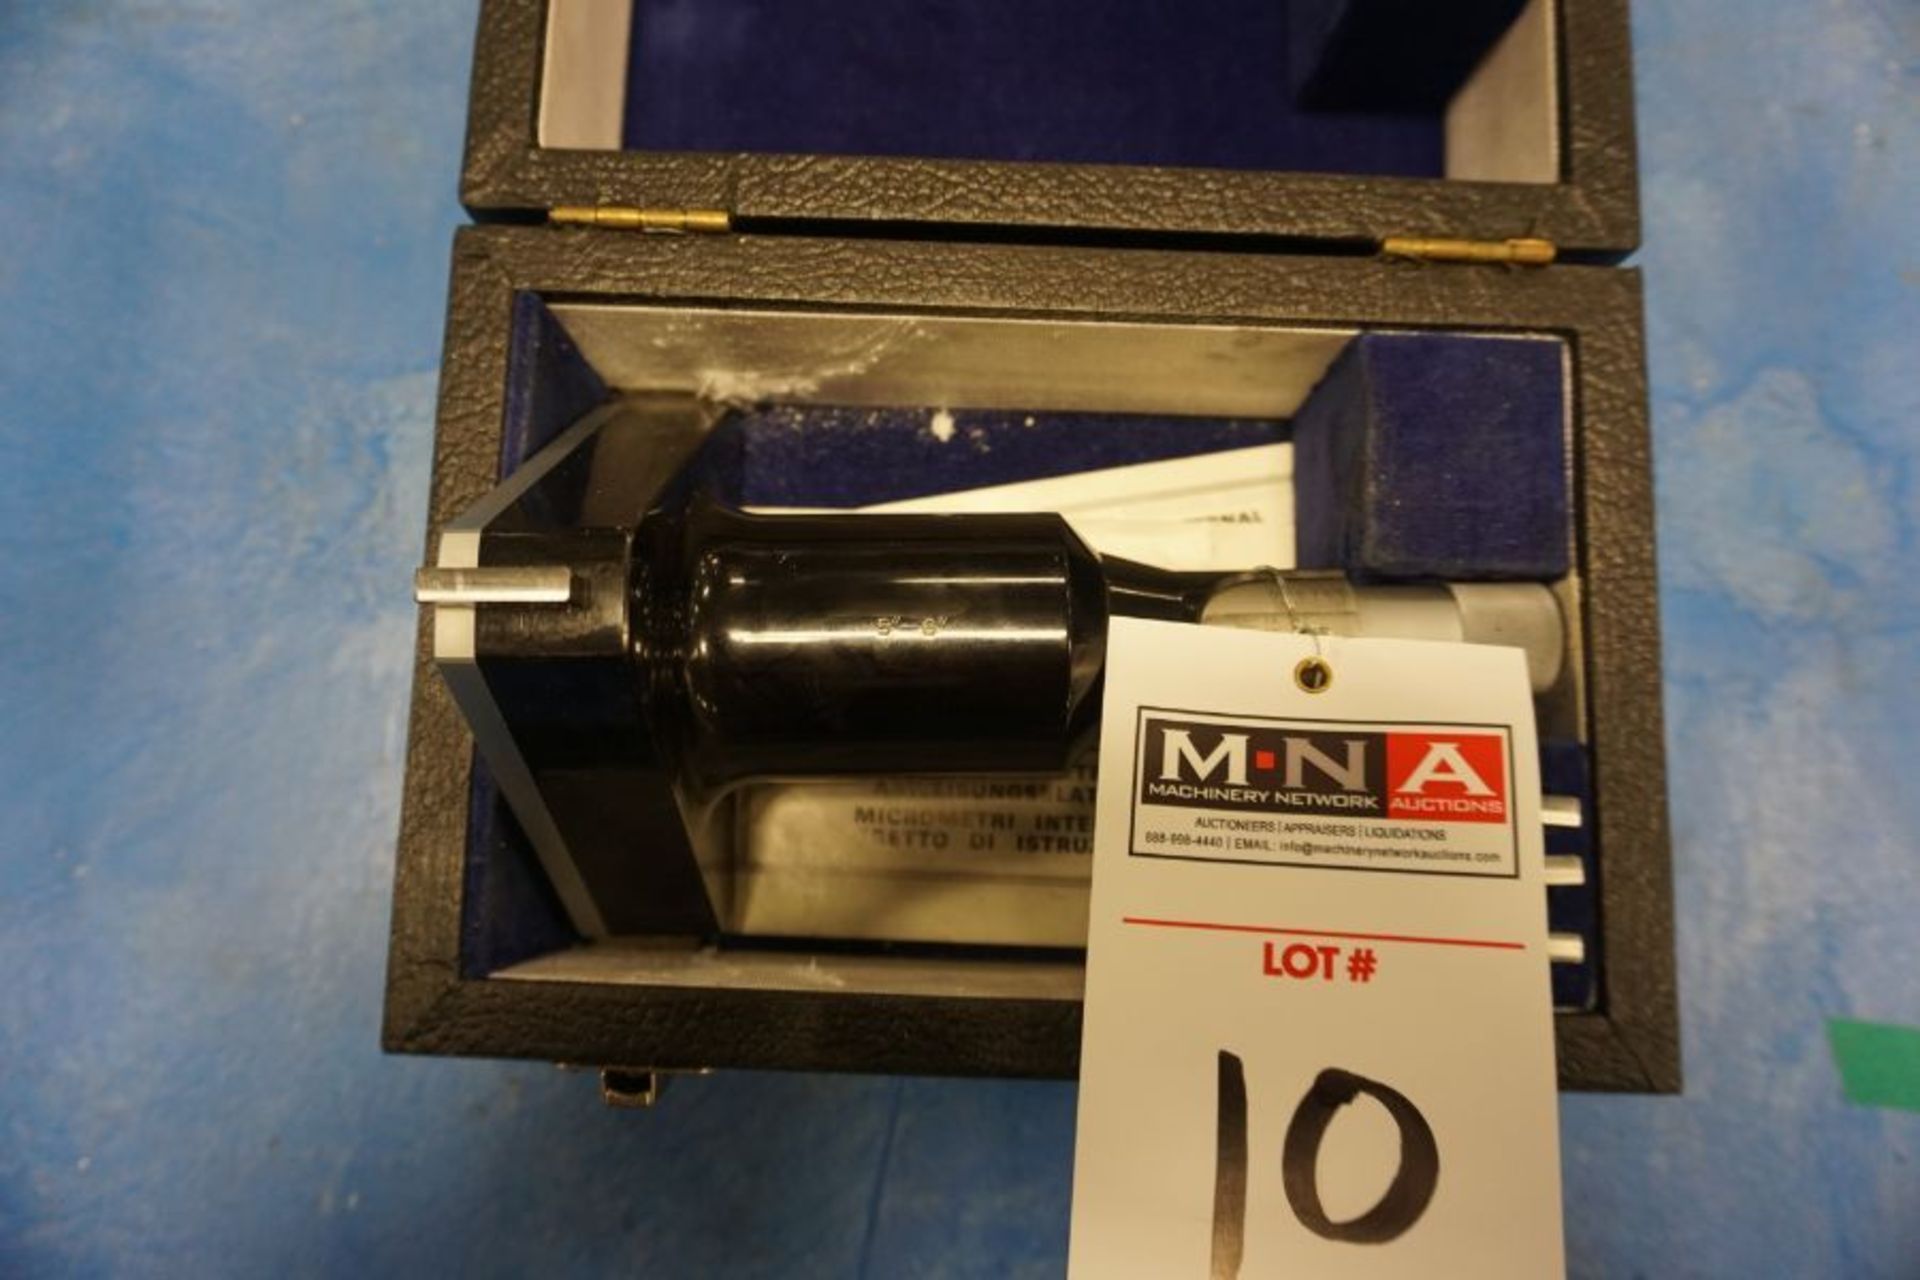 Bowers 5" - 6" Internal Micrometer